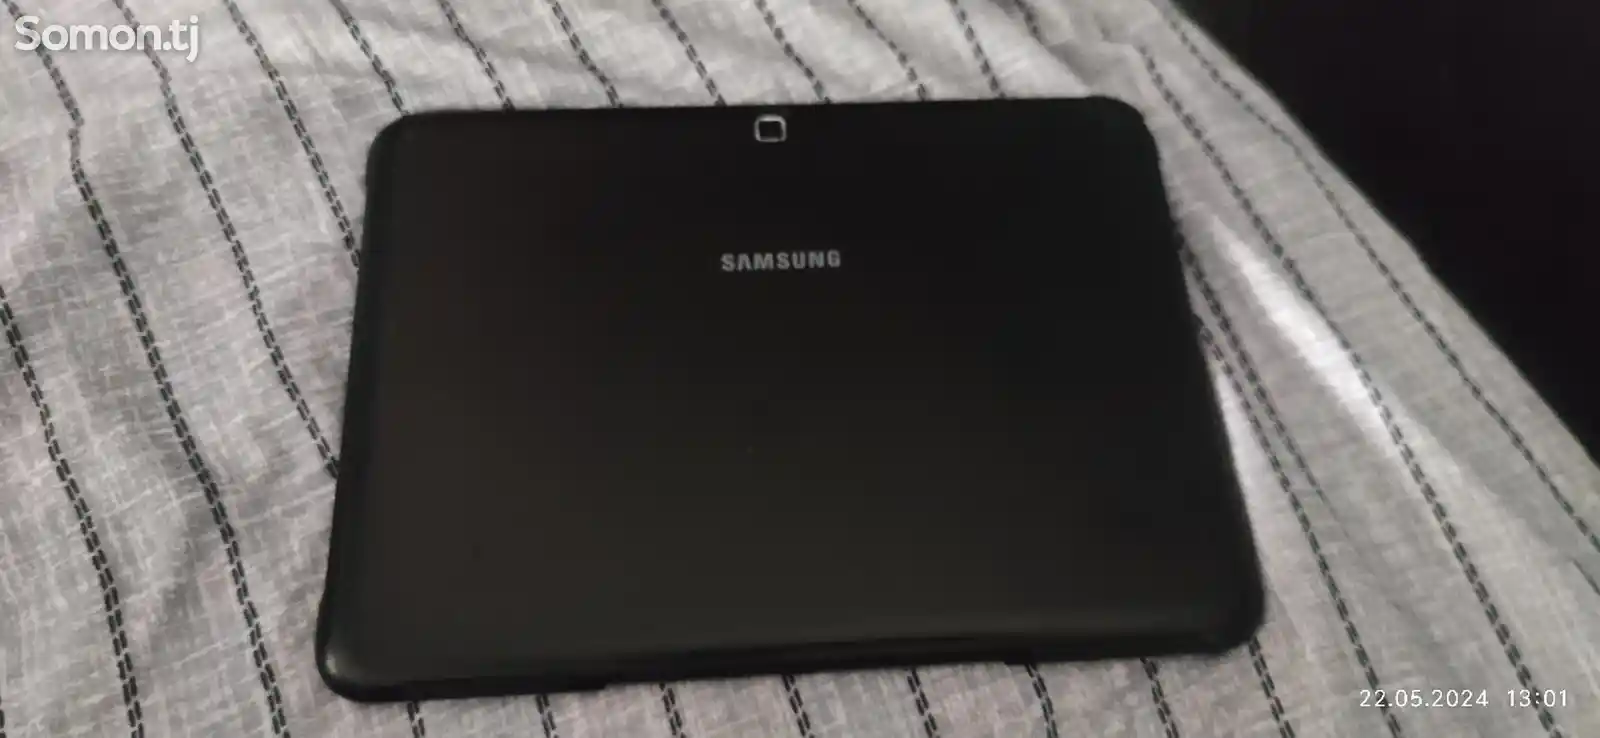 Samsung galaxy tab 4 16gb-3